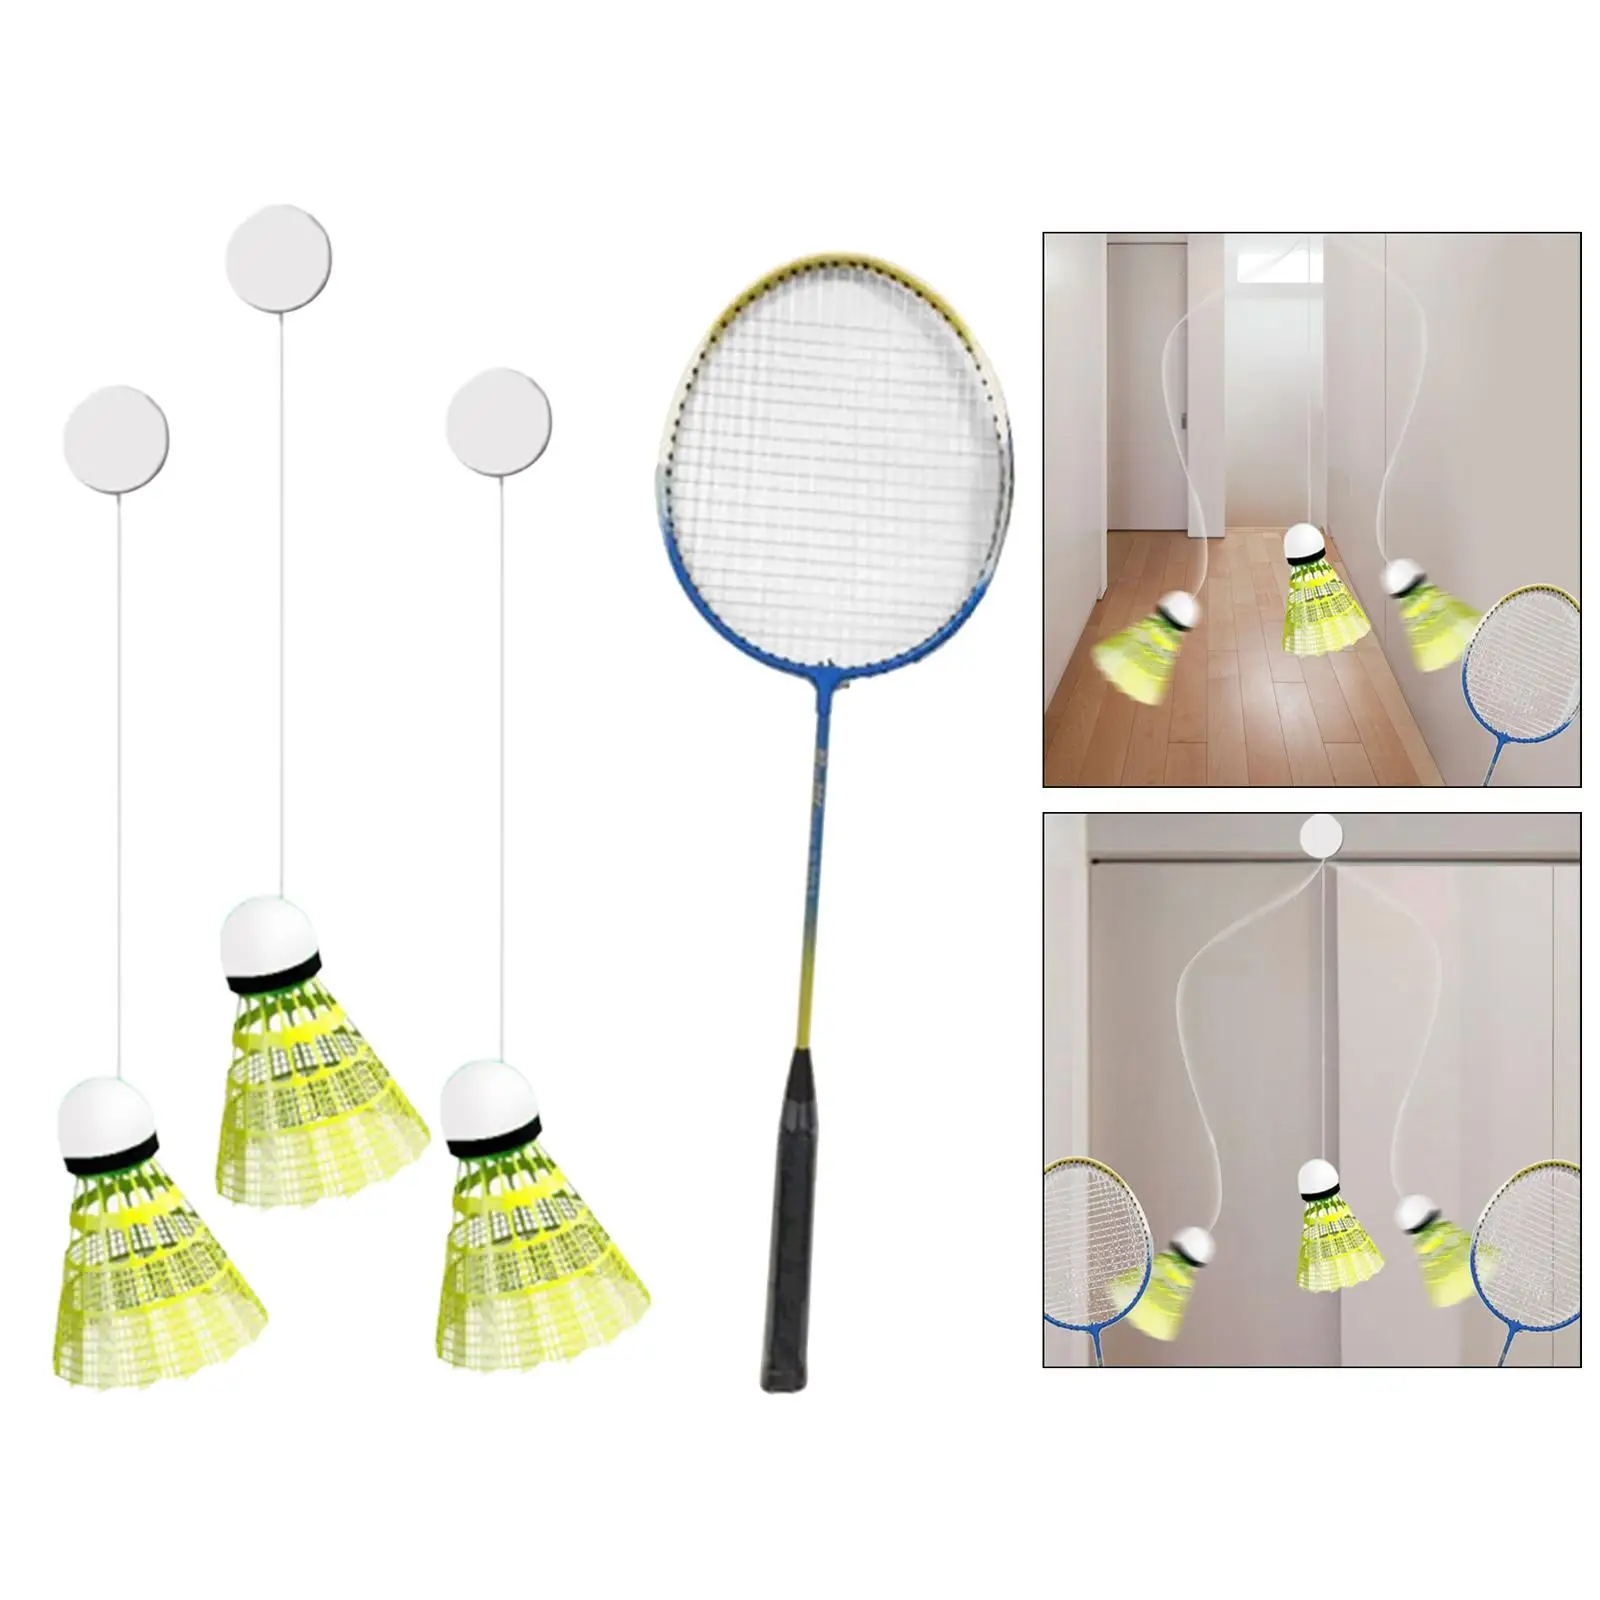 Indoor Badminton Trainer Equipment Solo Practice Single Player Practice Self Training Badminton Training for Sports Home Fitness